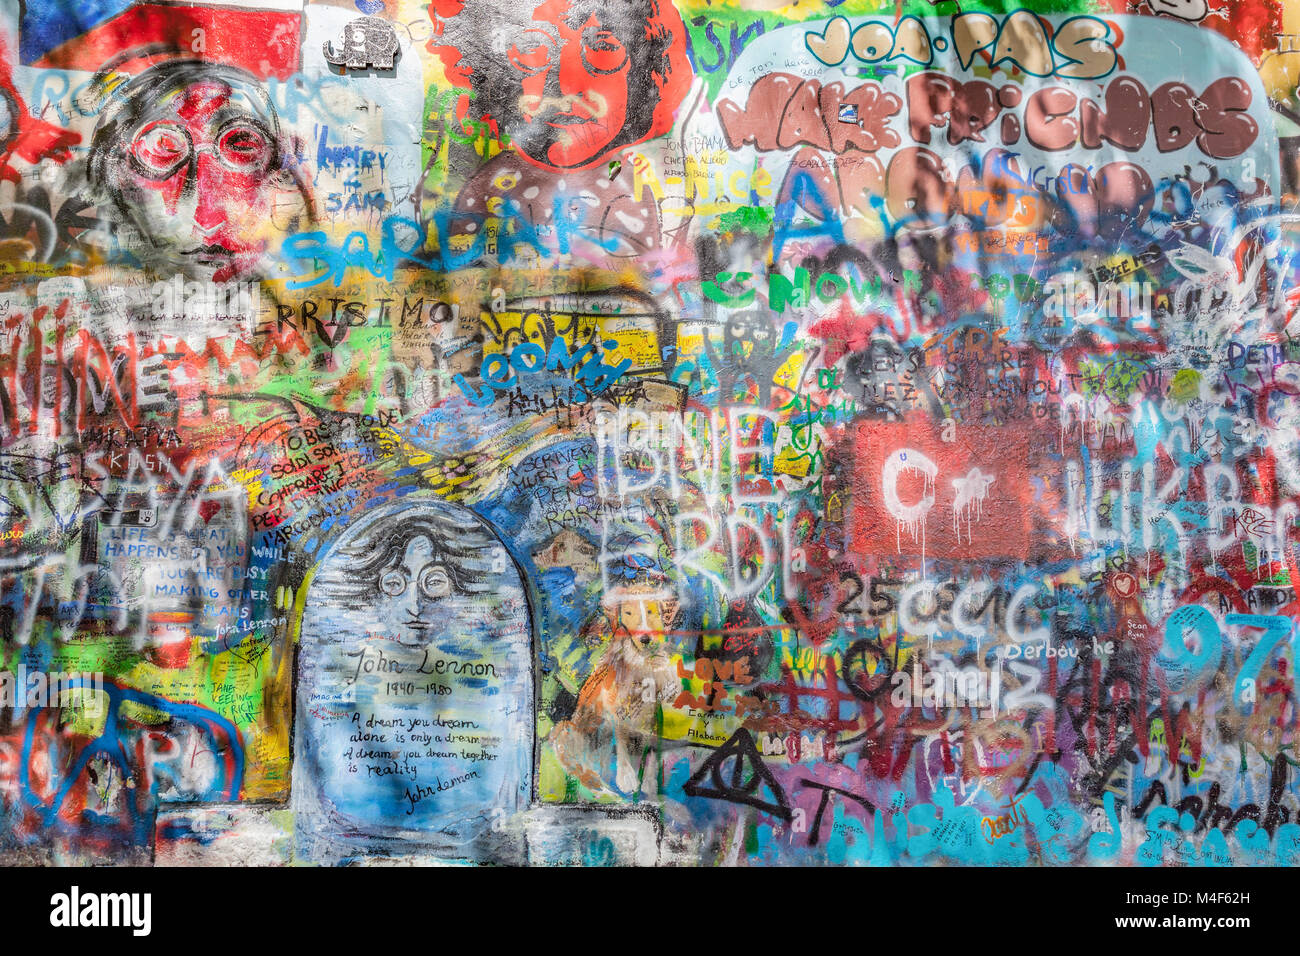 John Lennon Wall, Prague, Czech Republic. Graffiti background Stock Photo